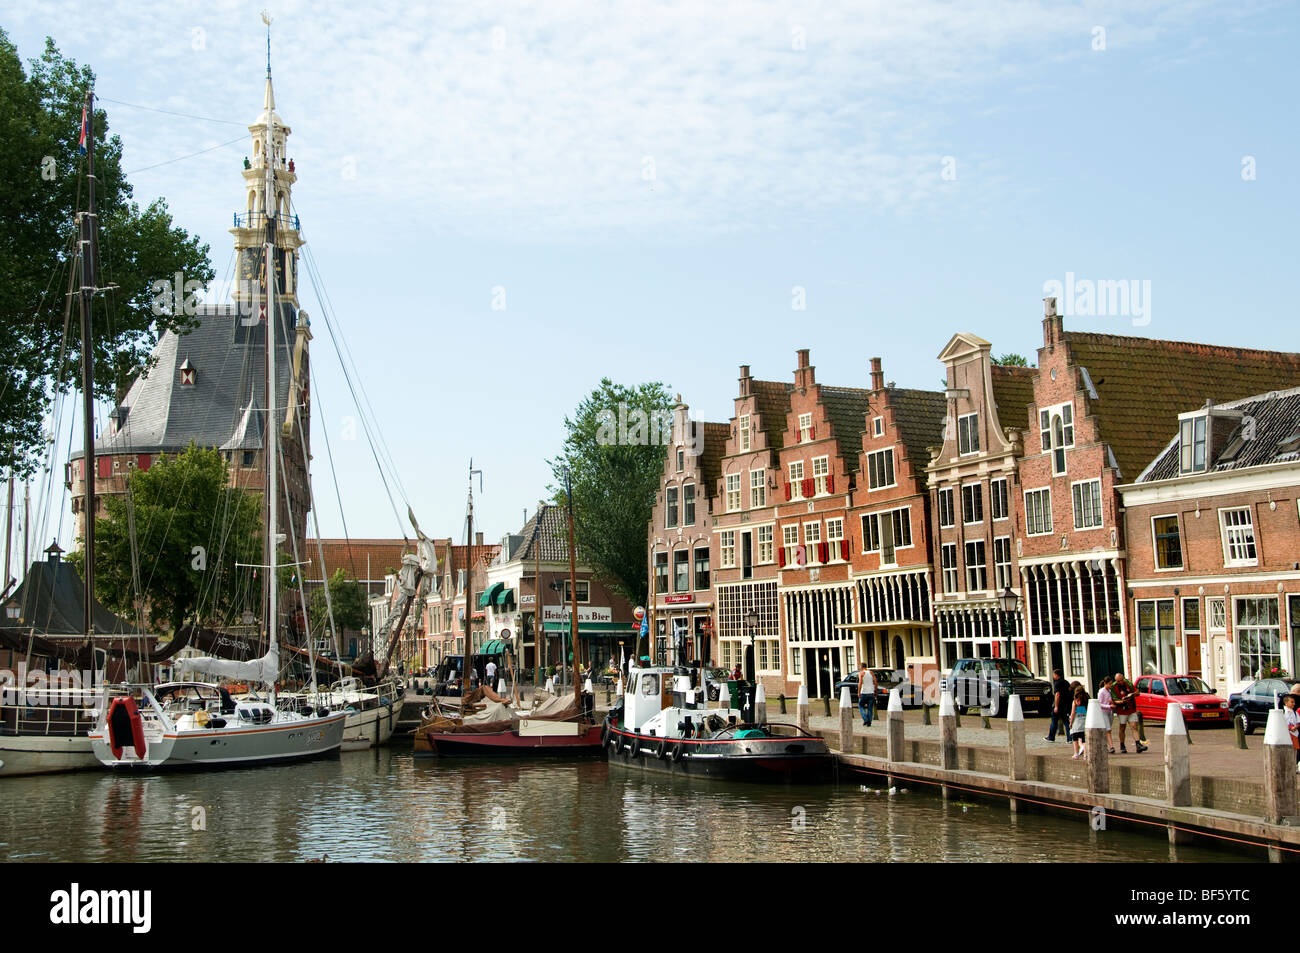 Hoorn paesi Bassi Olanda porto storico porto VOC Foto Stock